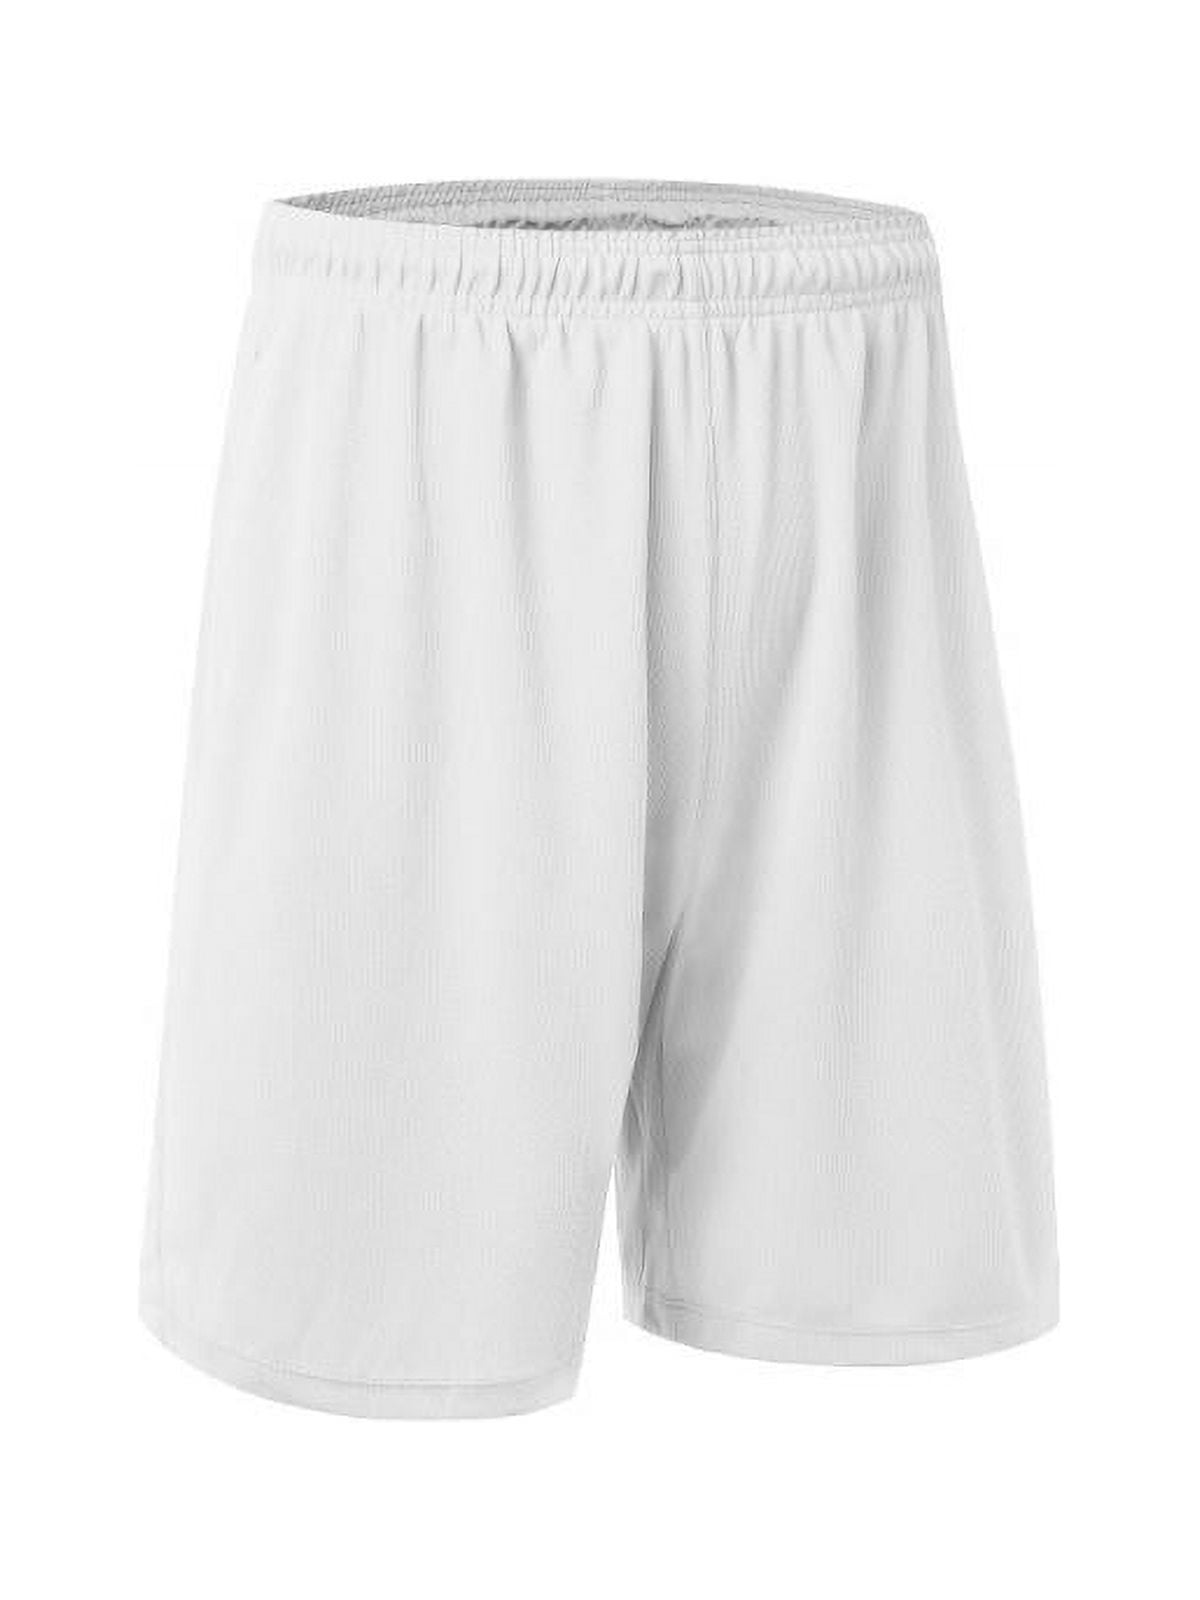 Men's Shorts Fashion Casual Beach Sports Half Pants Fitness Cool Running -  Walmart.com